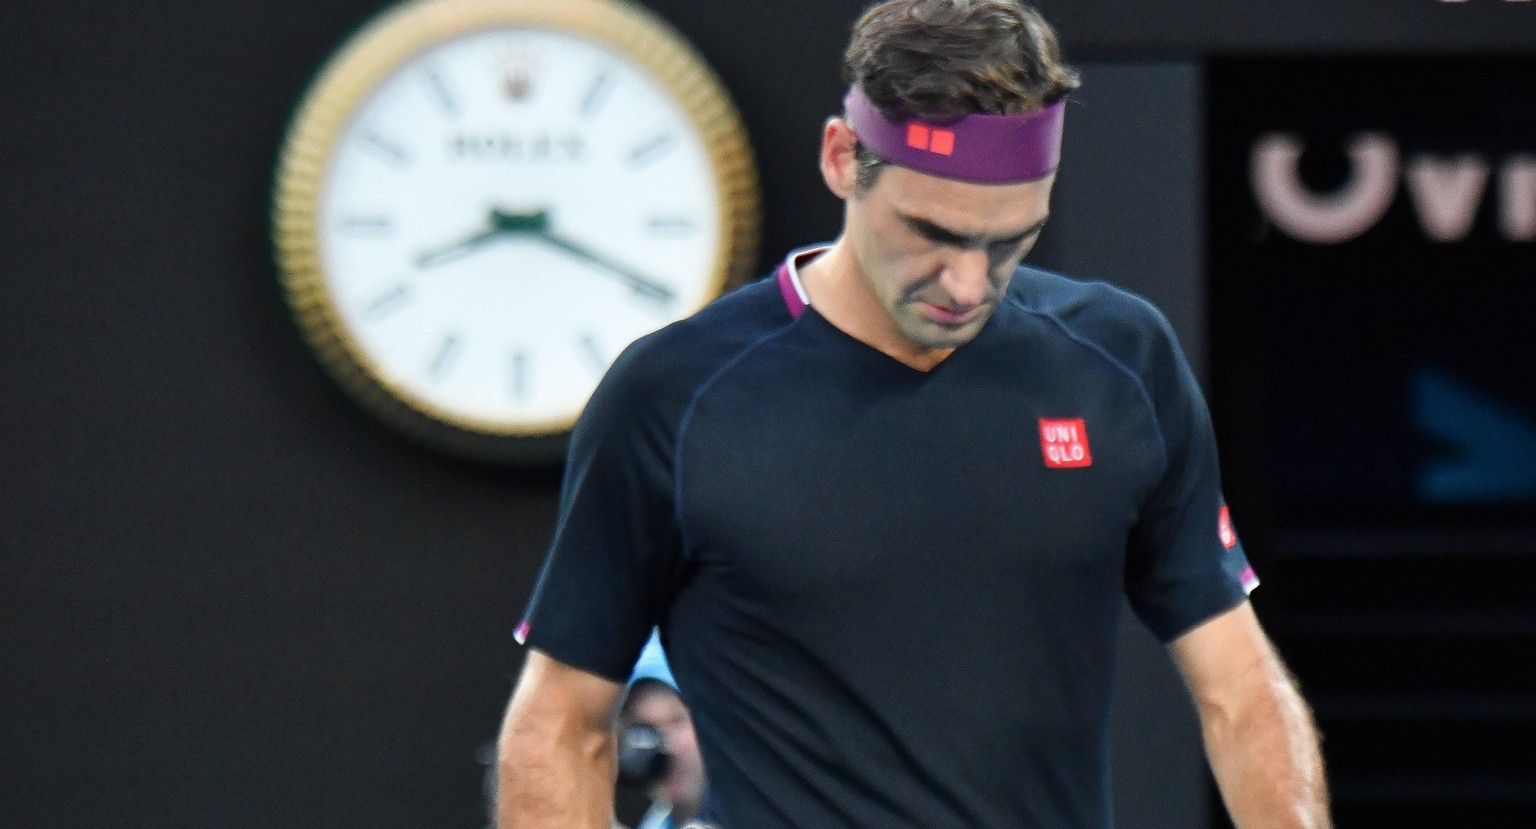 Australian Open 2020 - Roger Federer - Suisse TENNIS - Australian Open 2020 - 23/01/2020 ChrysleneCaillaud/Panoramic PUBLICATIONxNOTxINxFRAxITAxBEL